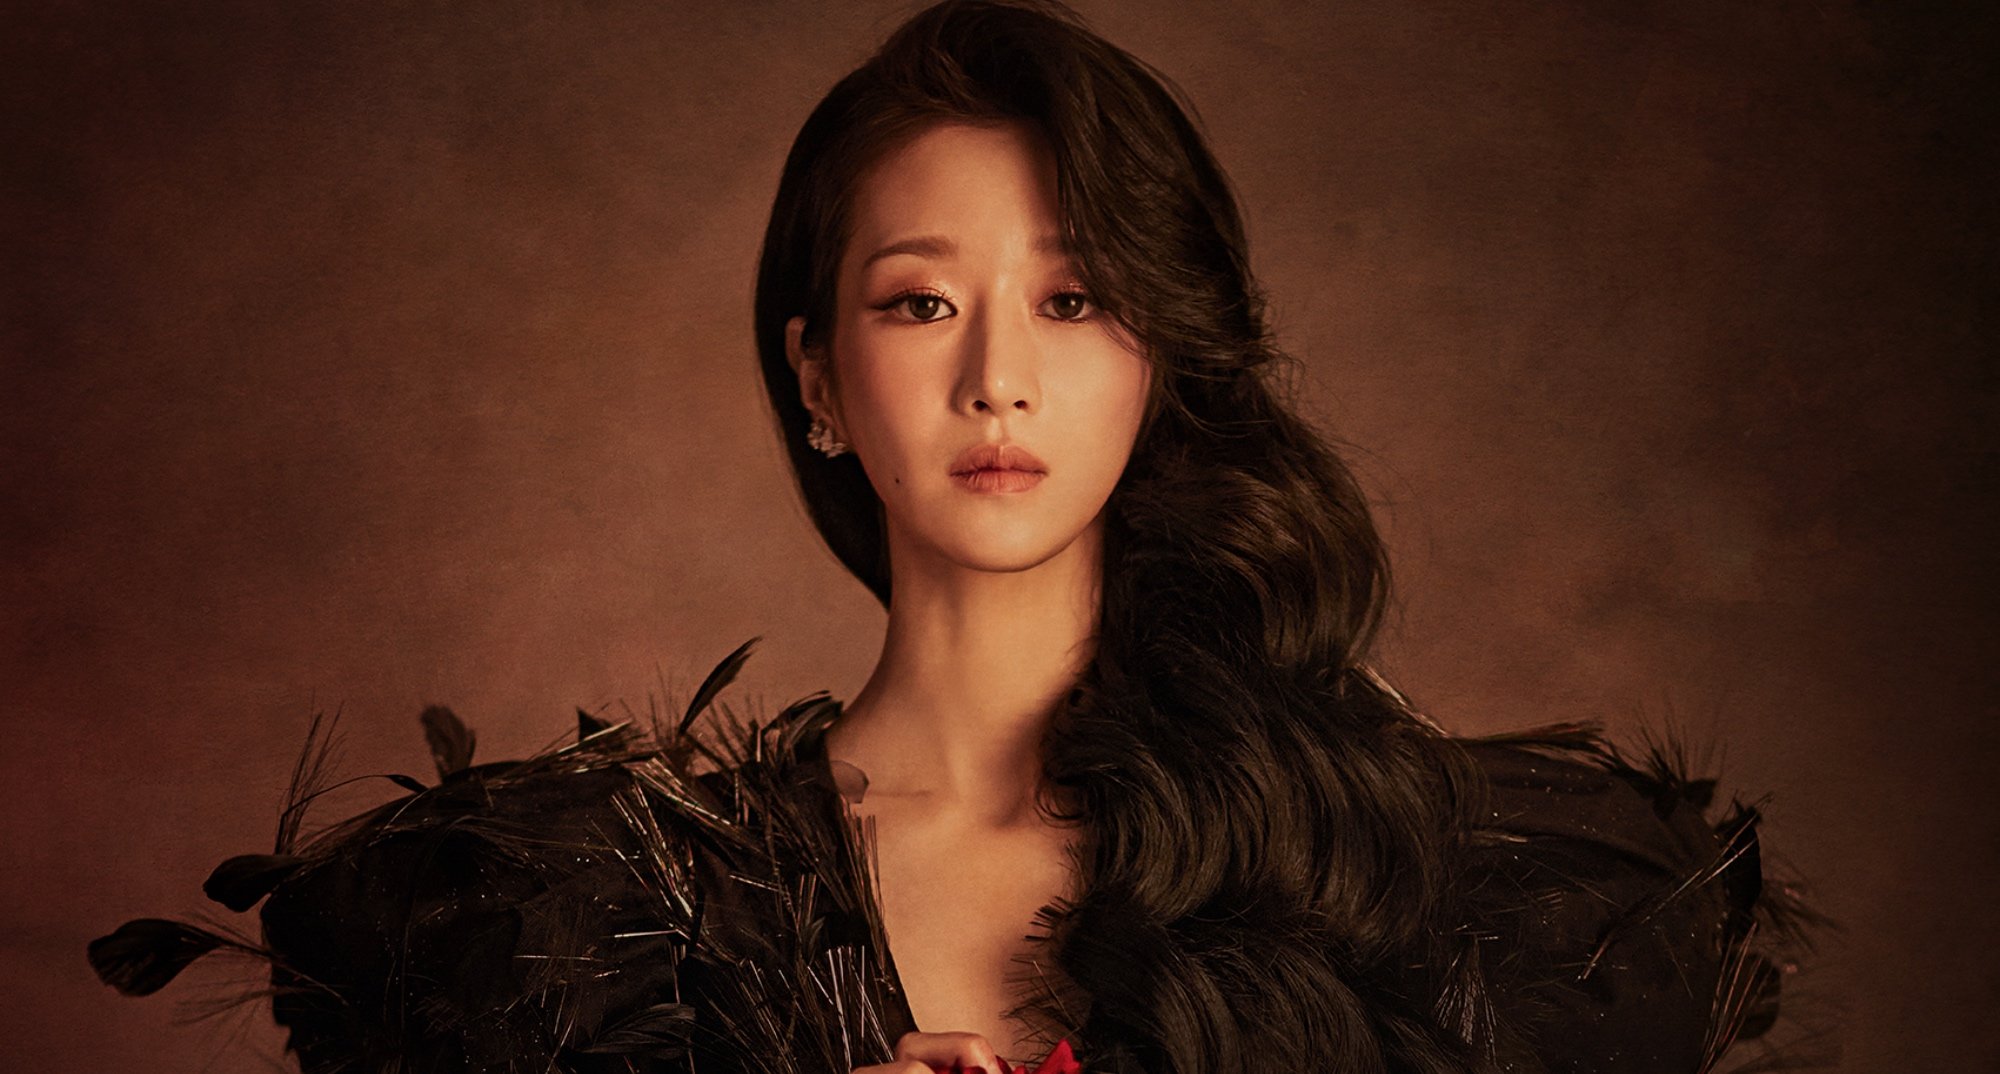 Seo Ye-ji as the lead in the K-drama 'Eve' wearing black feathered dress.